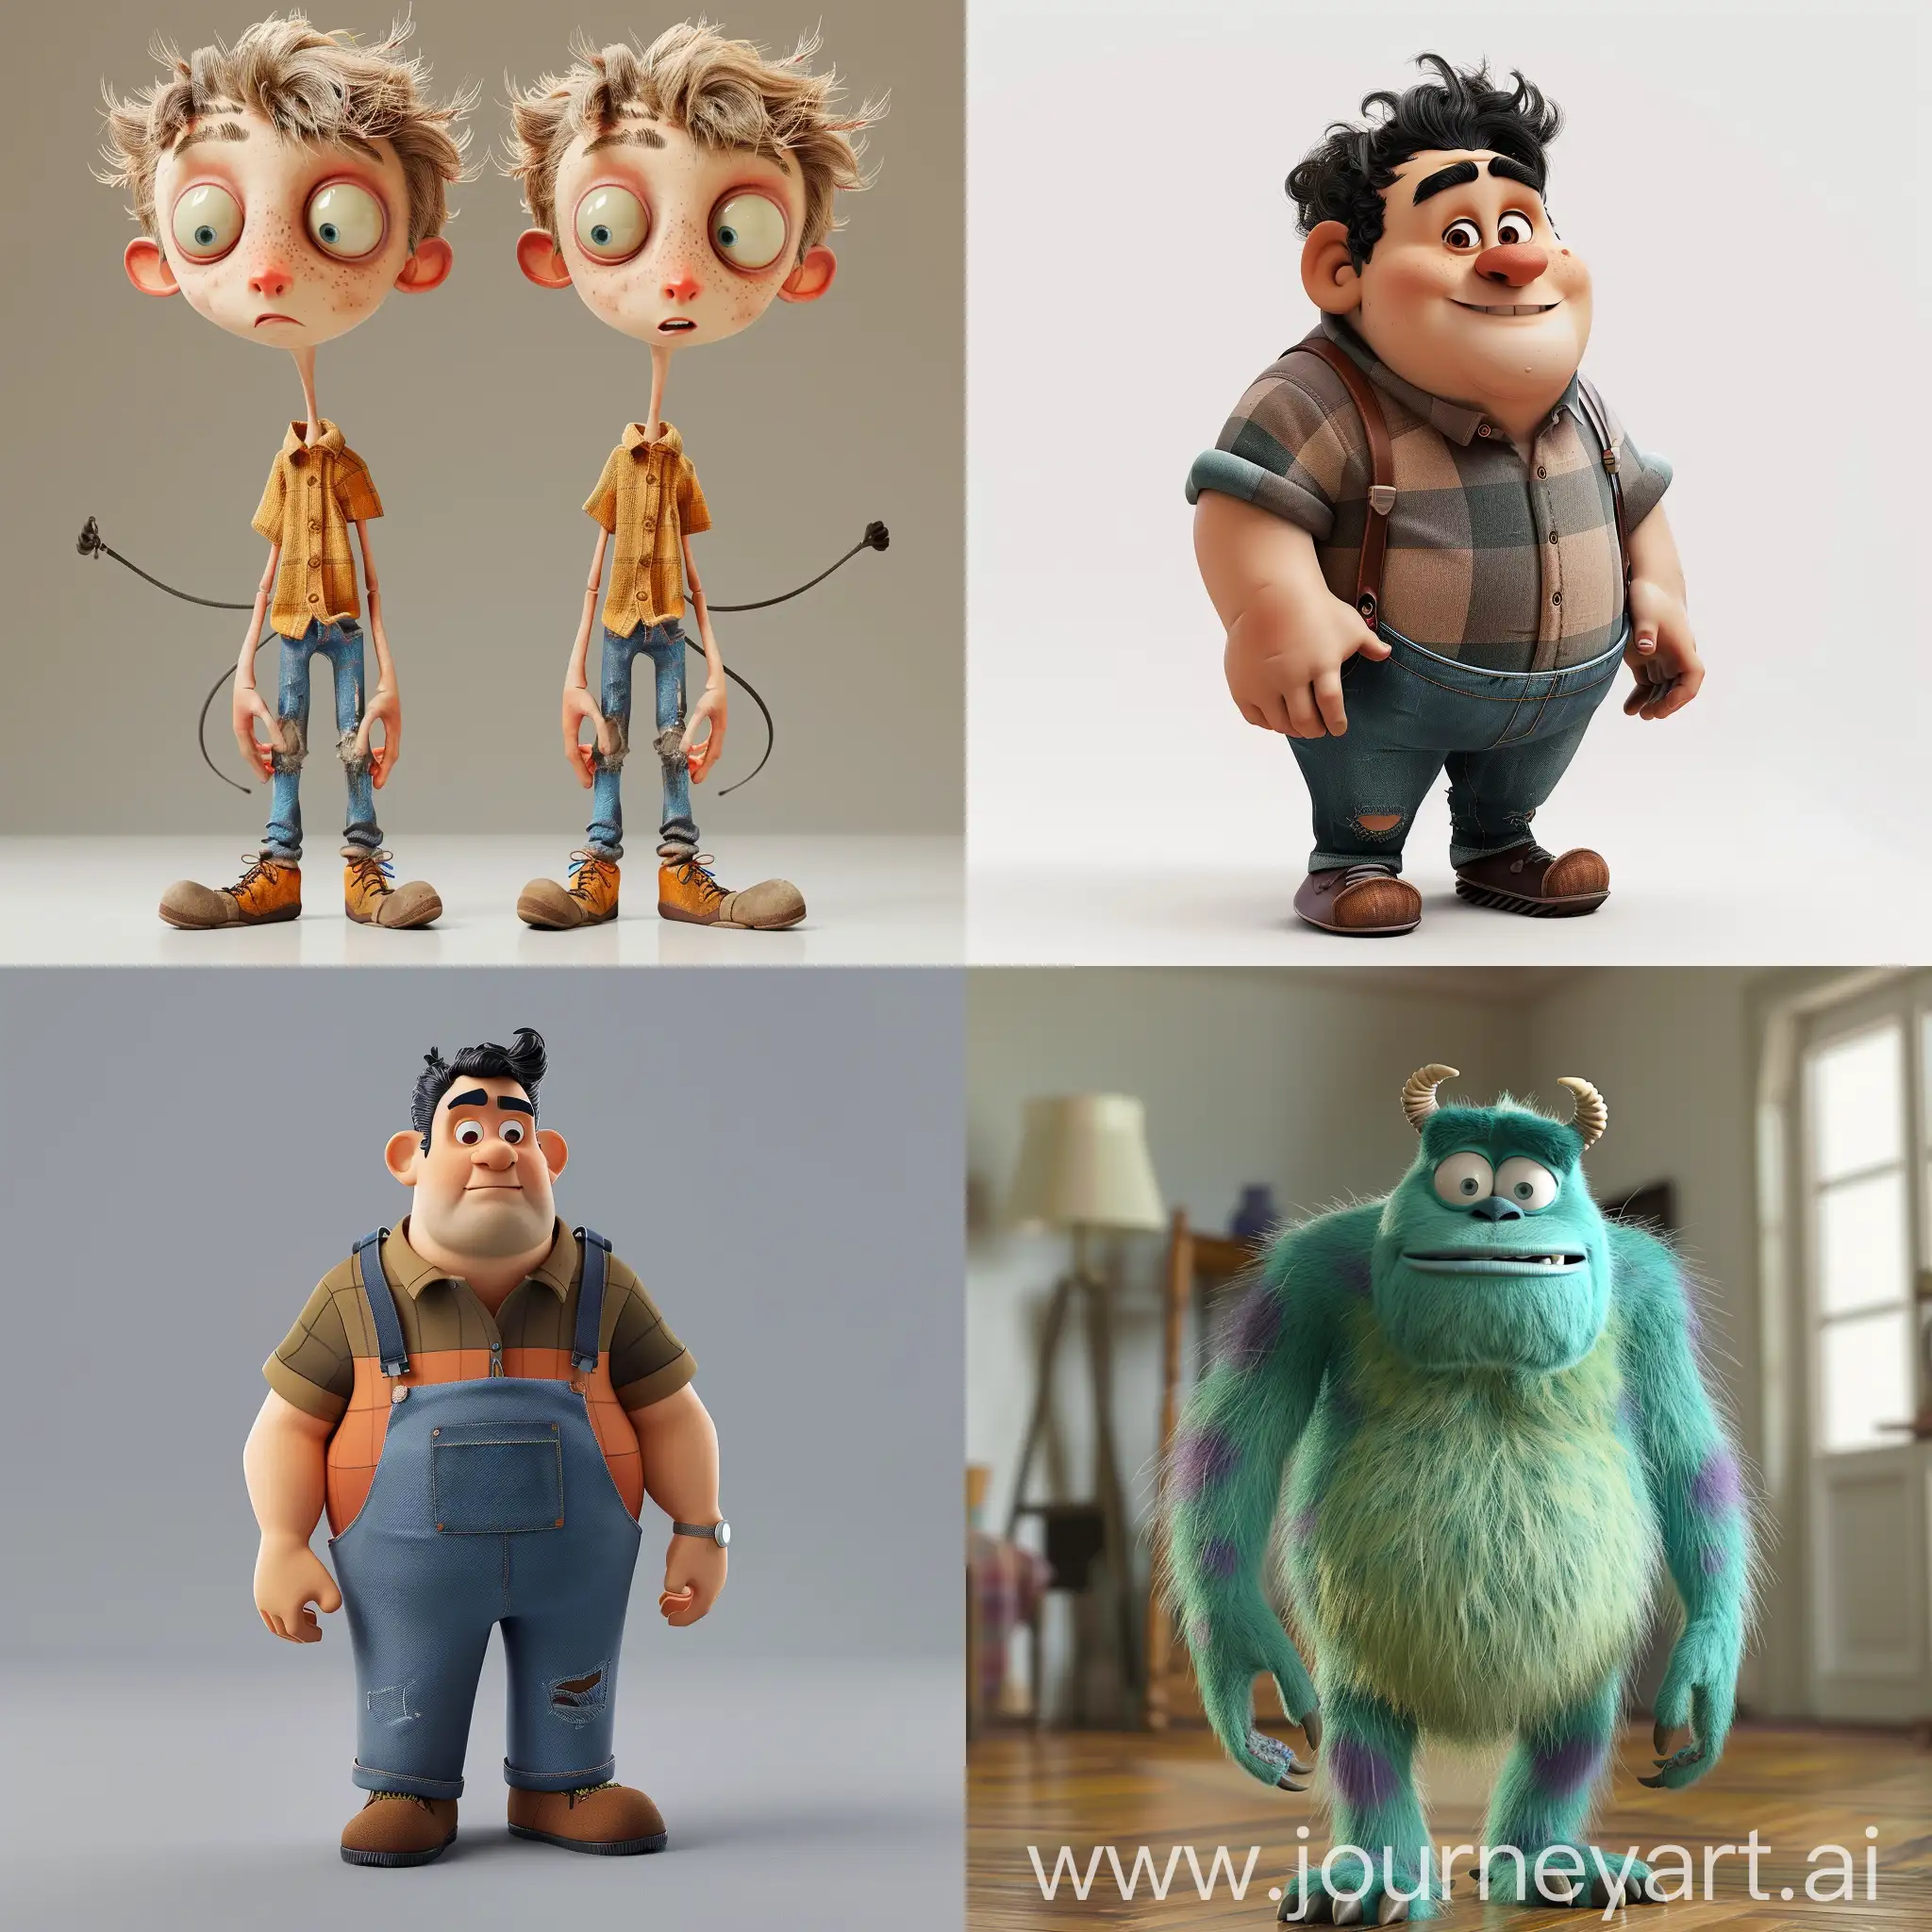 Pixar style full body character